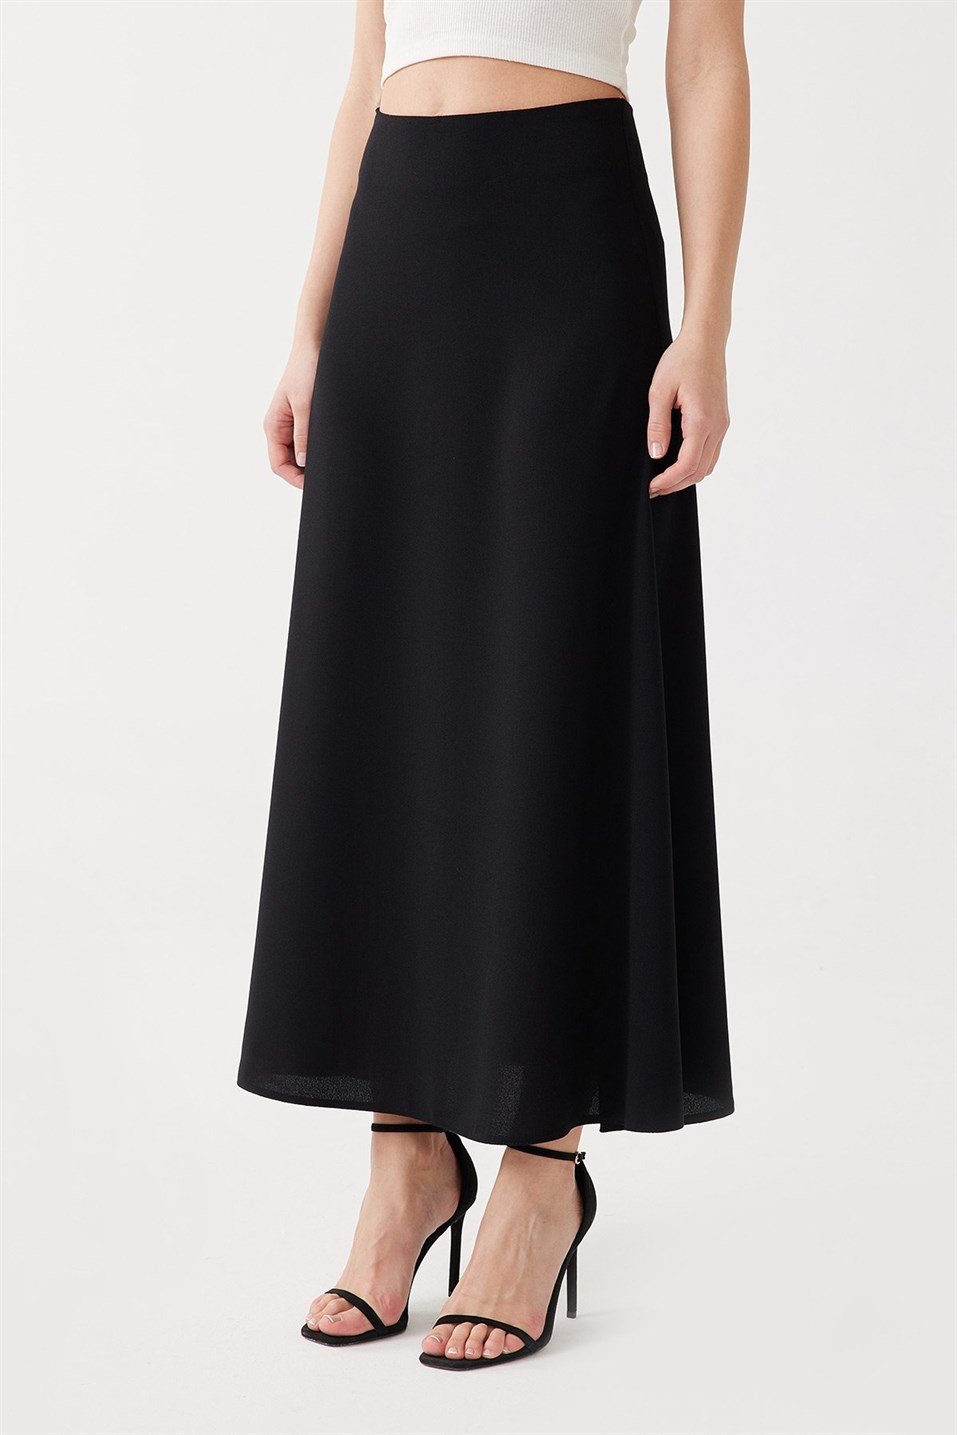 Black A-Line Crepe Skirt